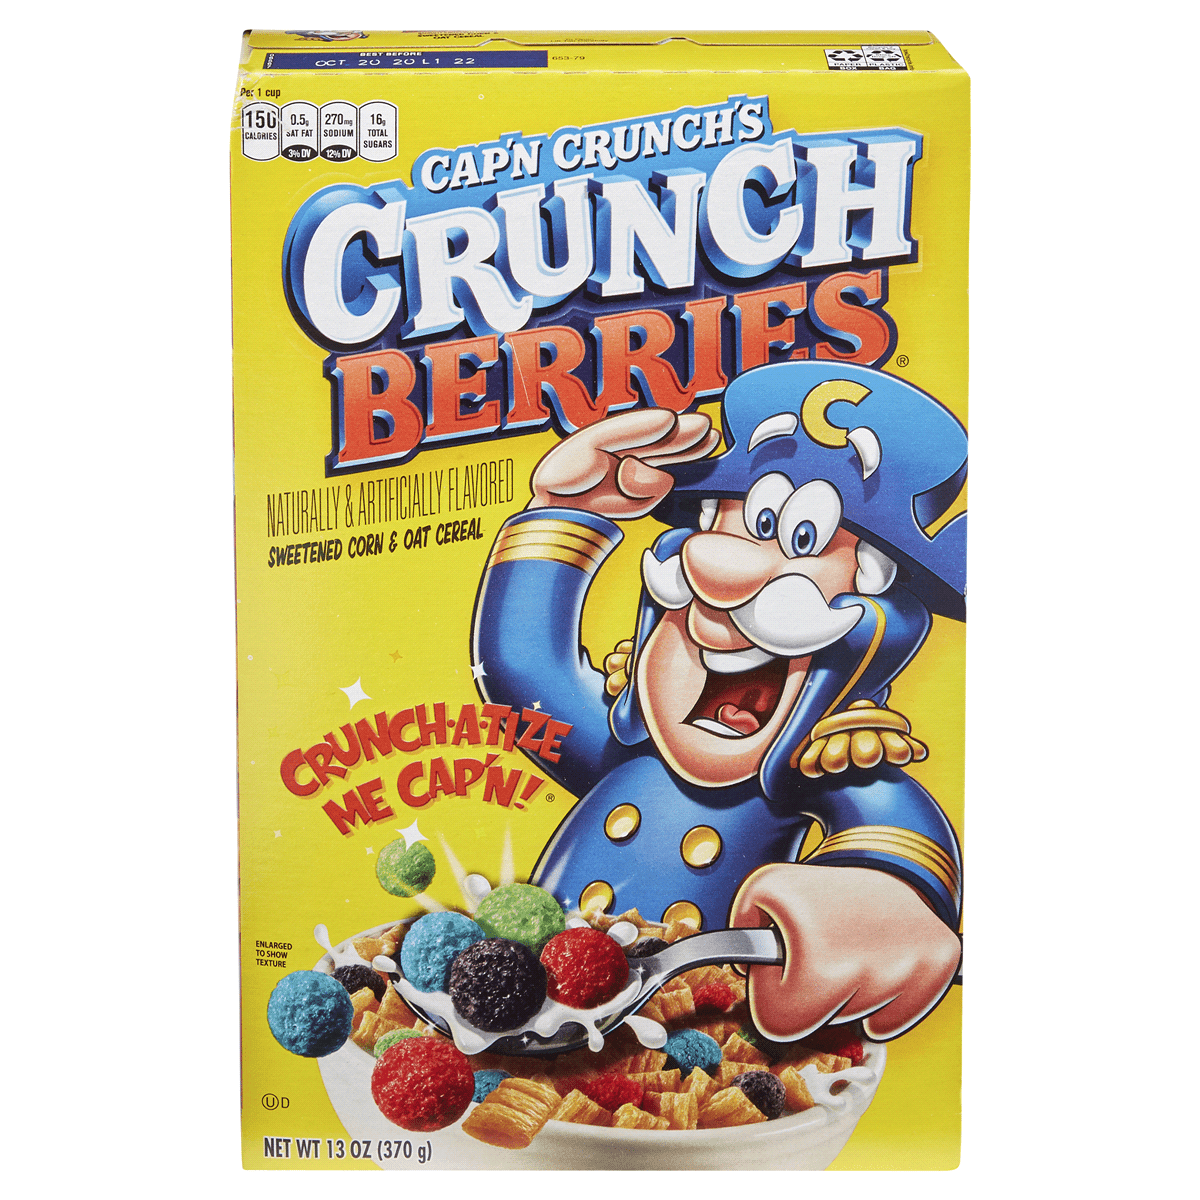 Cap'n Crunch Berries Cereal Box (370g)